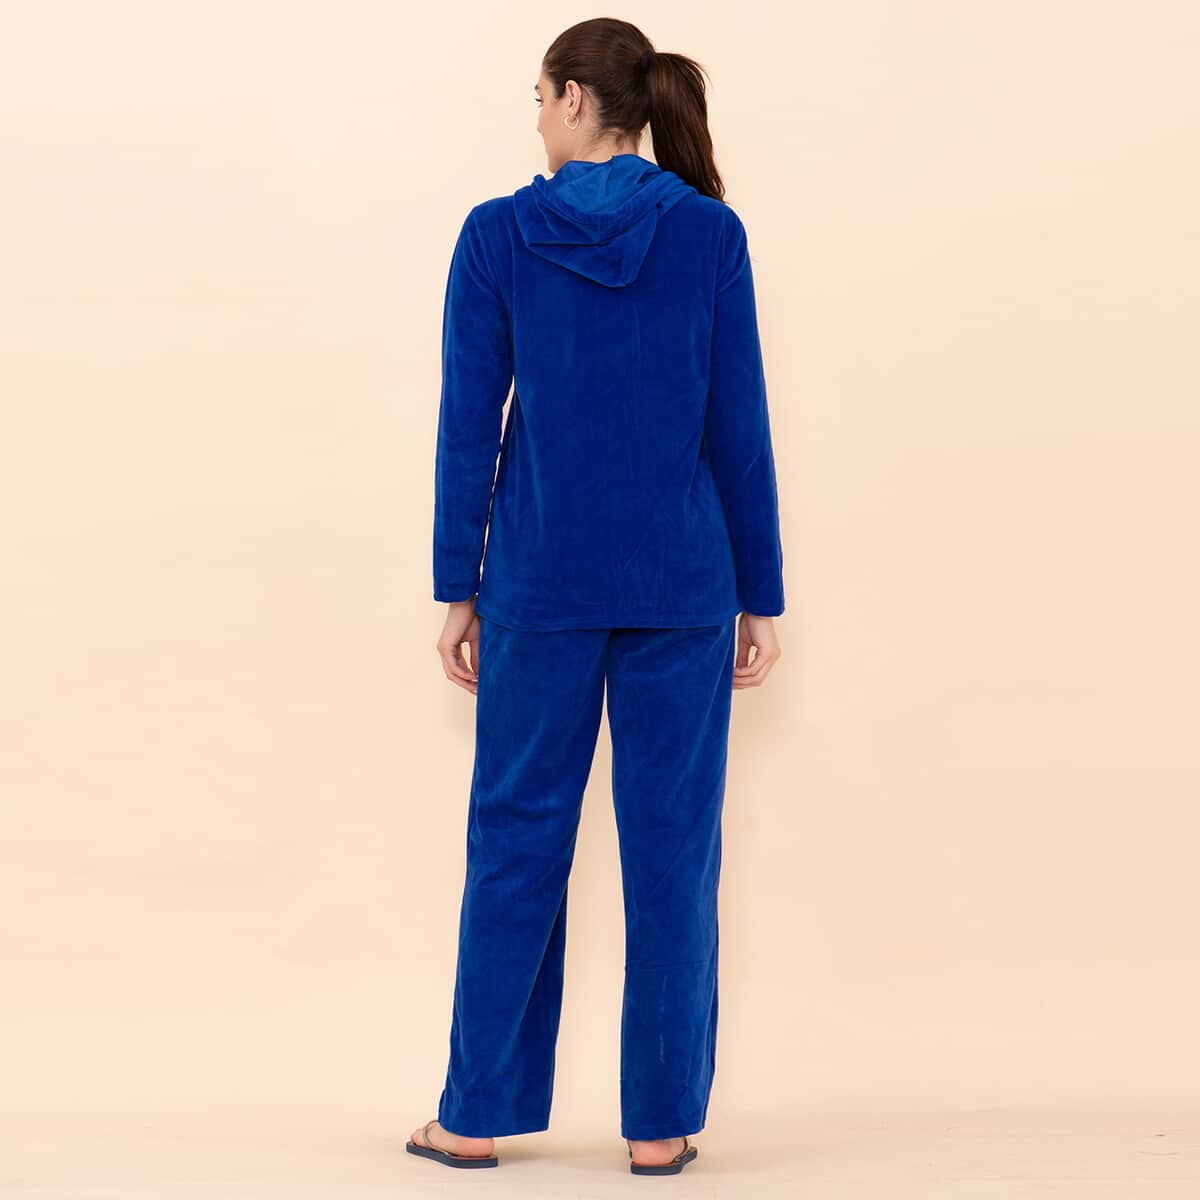 TAMSY Blue Velour Track Suit Set - L image number 1